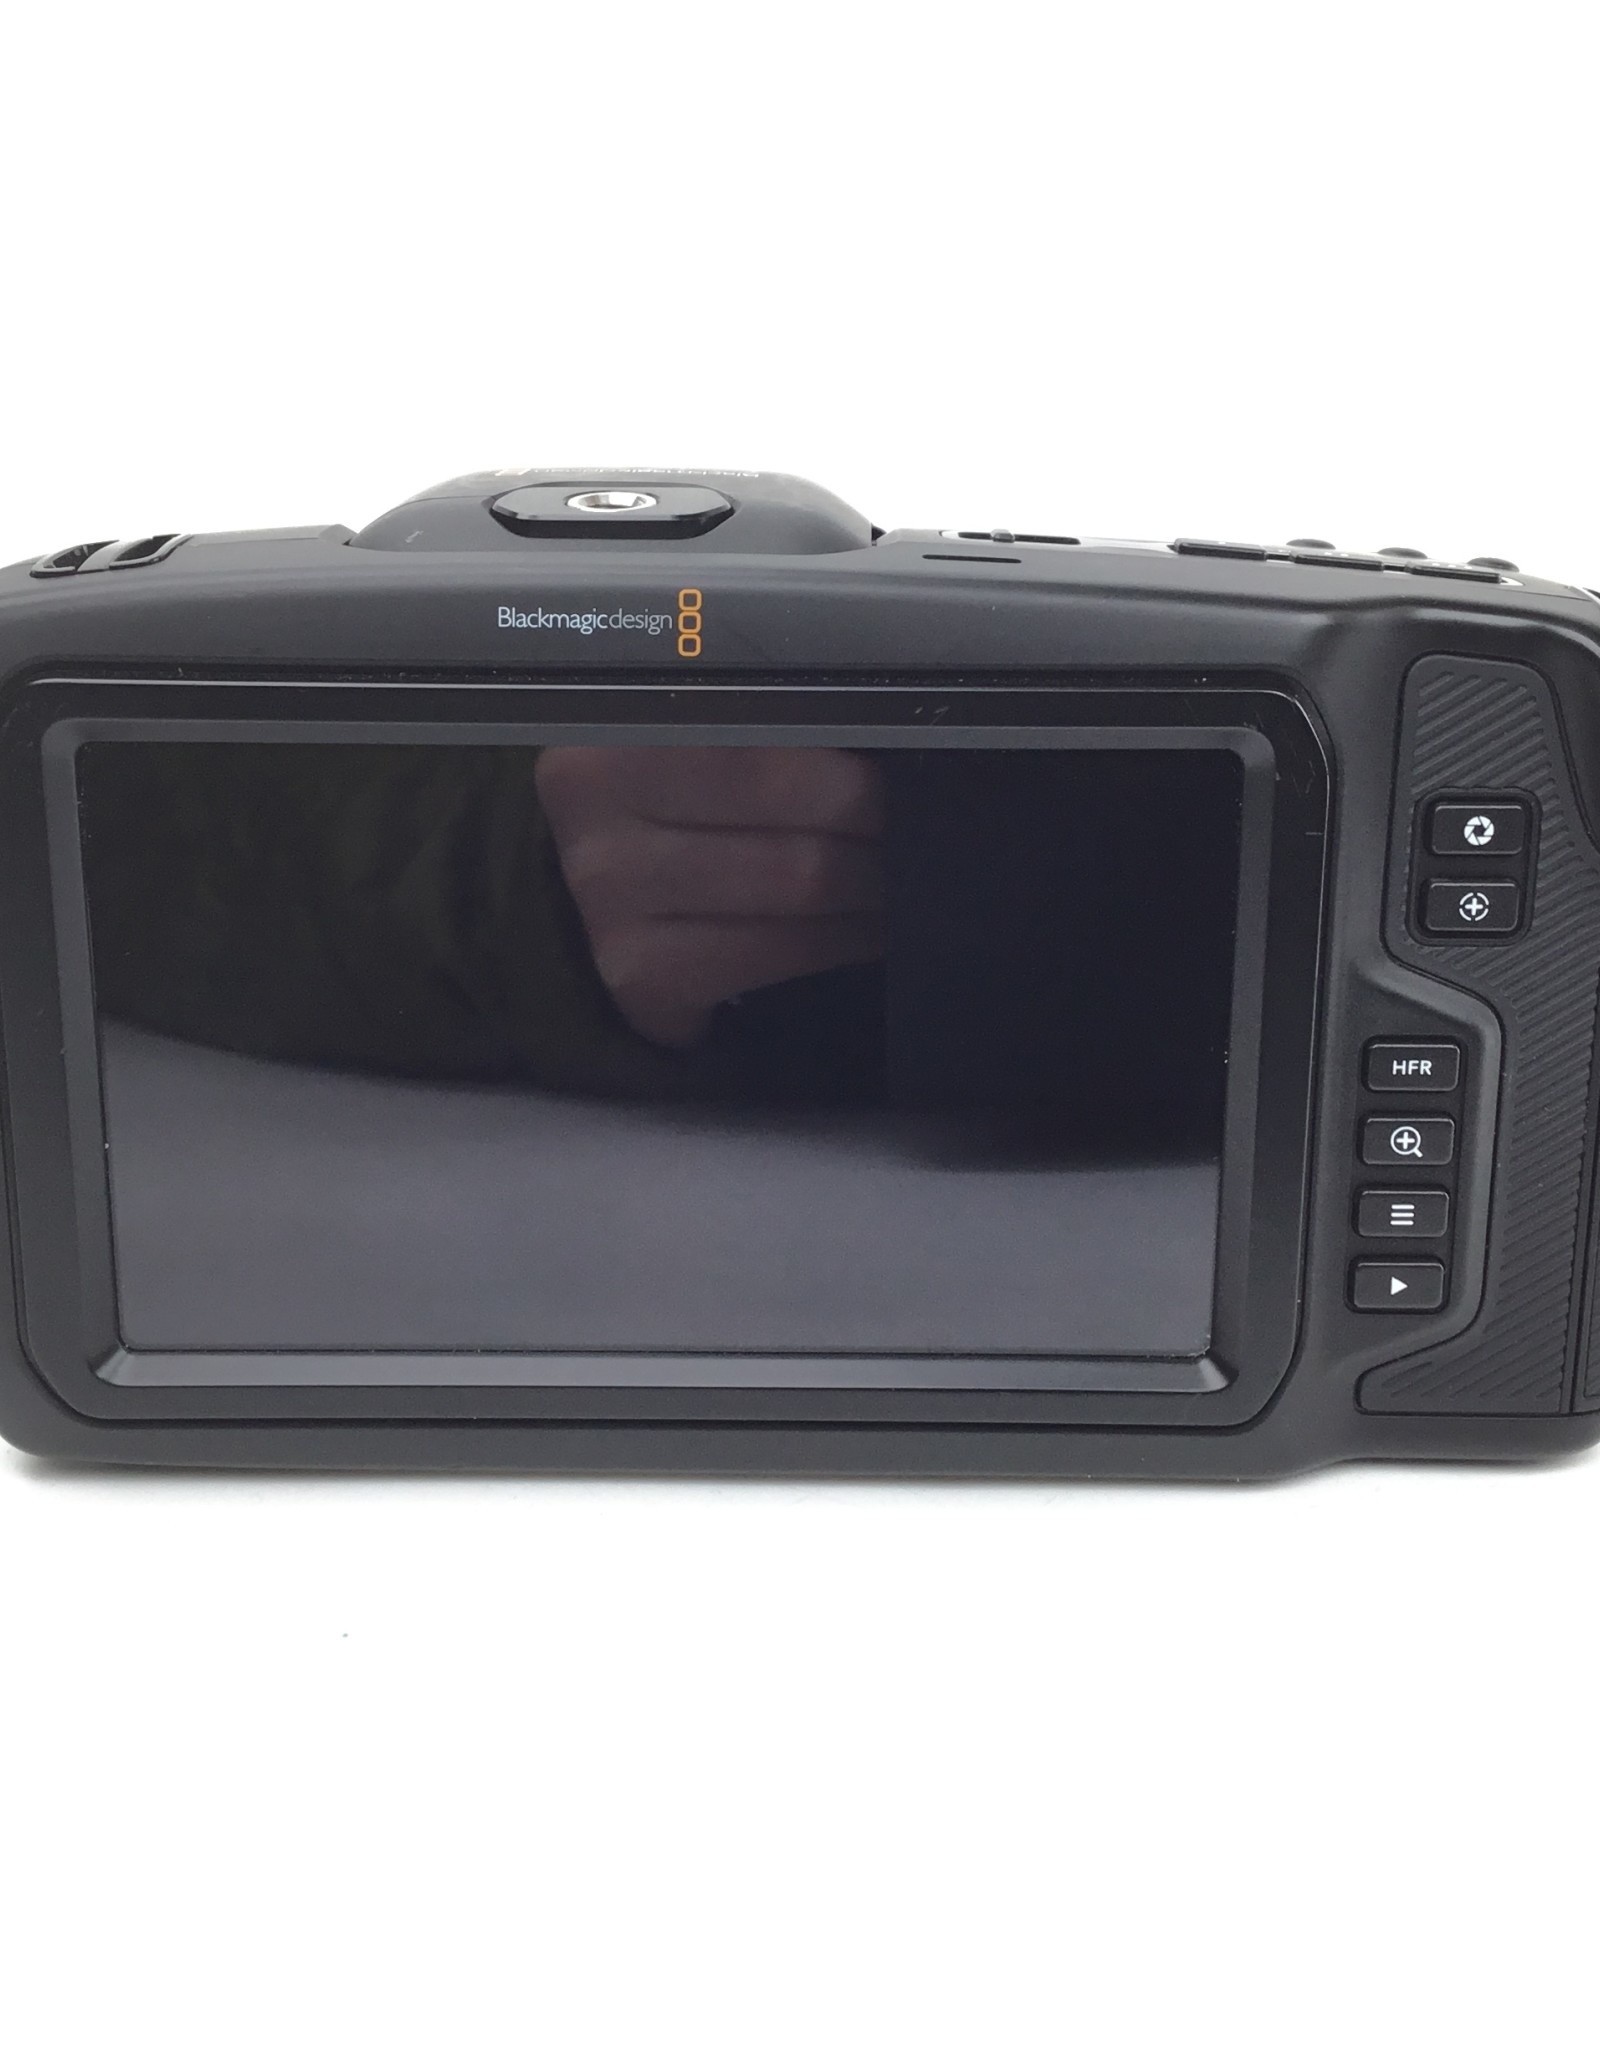 Blackmagic Design Blackmagic Design Pocket Cinema Camera 6K Used Good